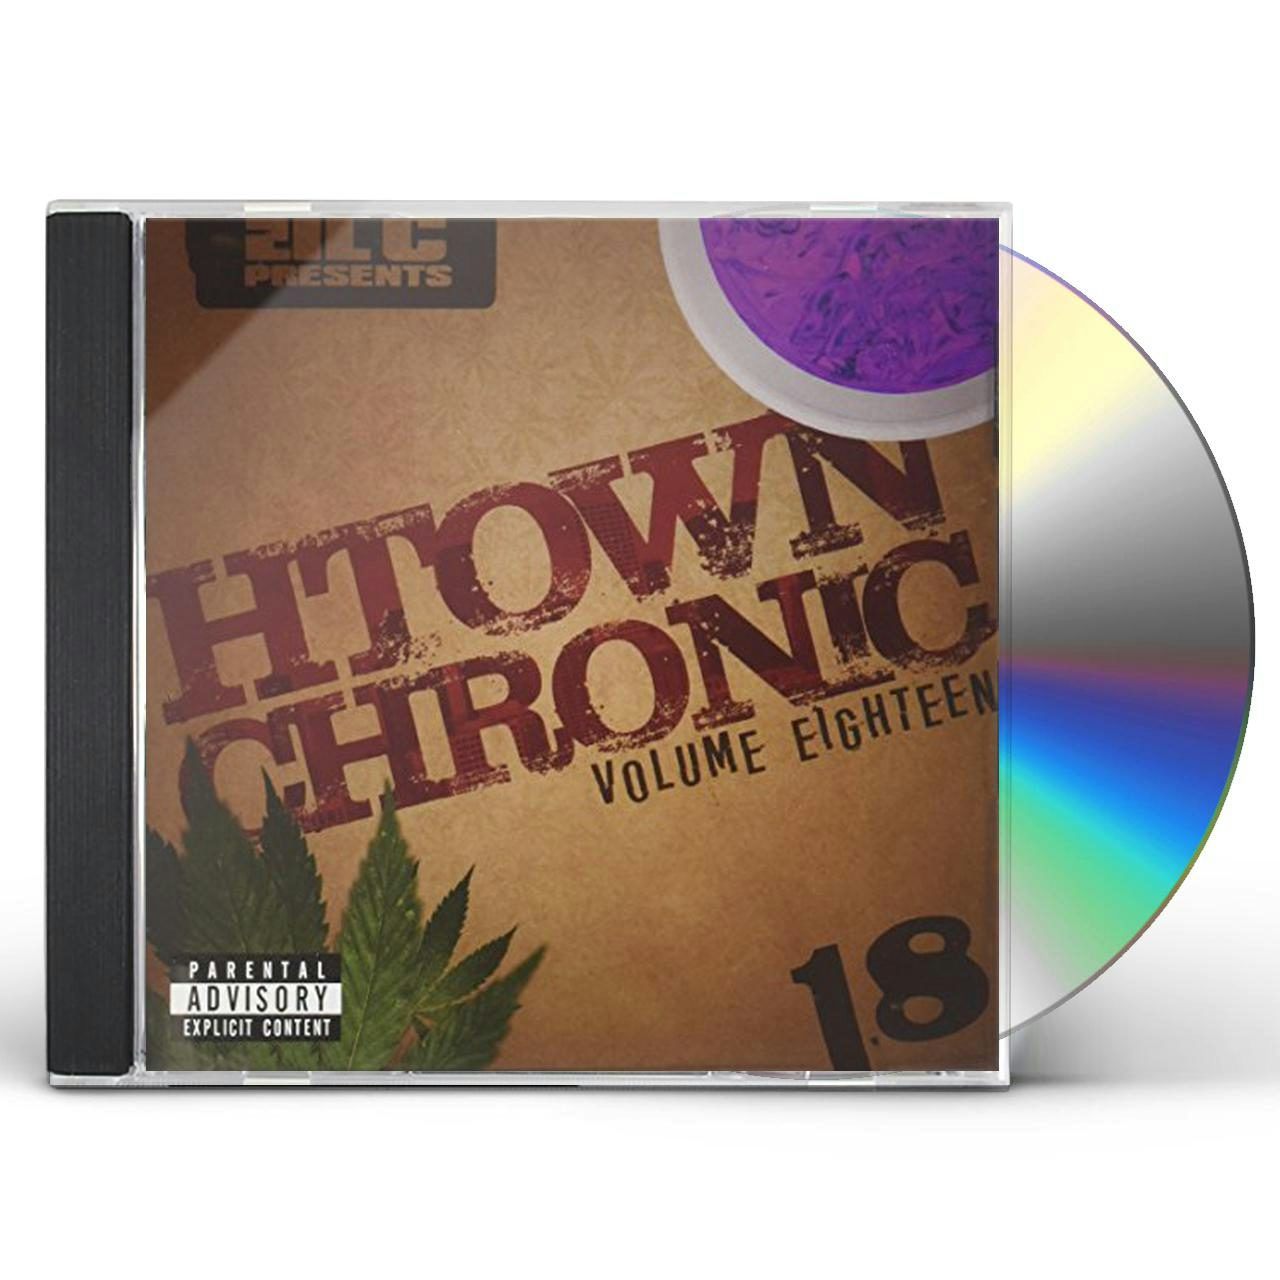 10Bandzlil c presents htown chronic 18 CD